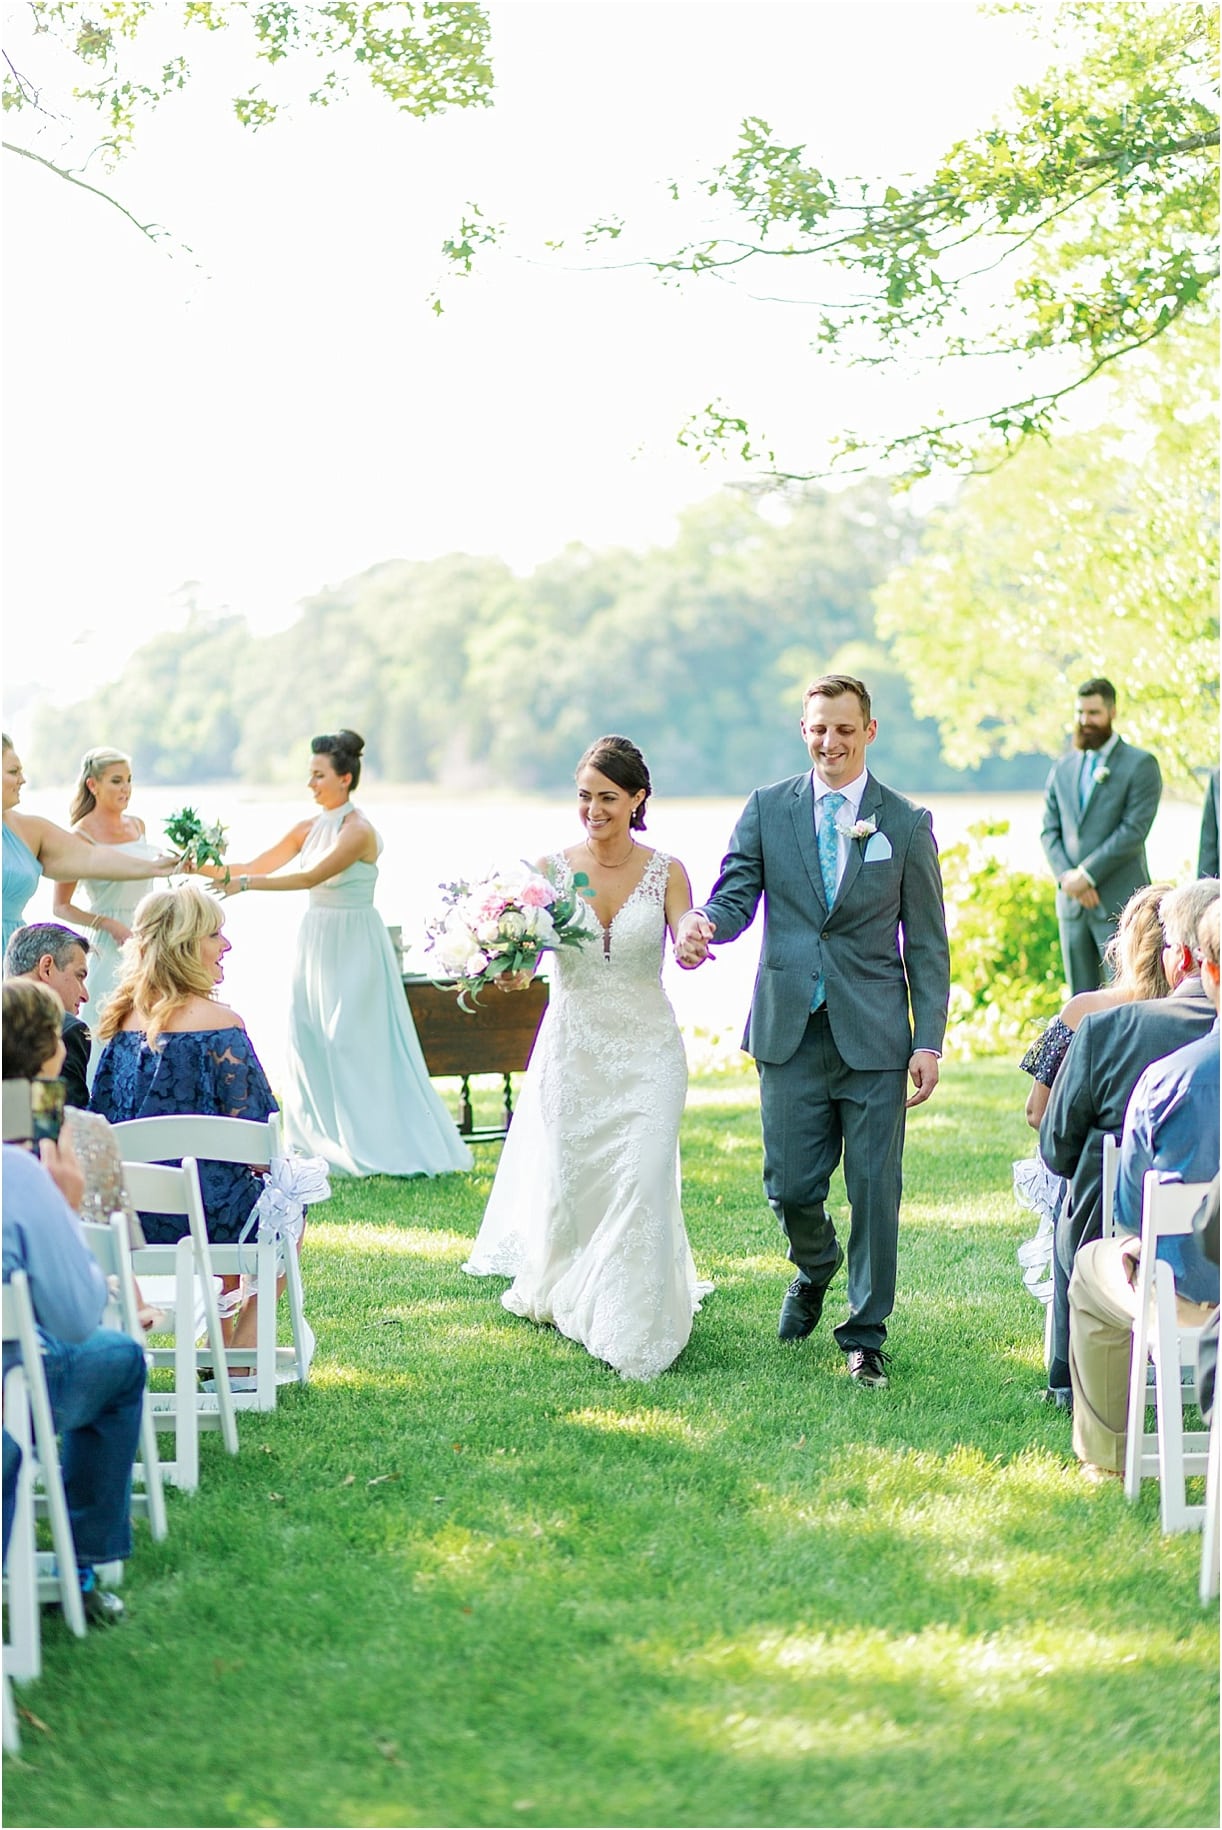 Cape Charles Wedding Venues | Blue Wedding | Hill City Bride Virginia Weddings Blog | Just Married